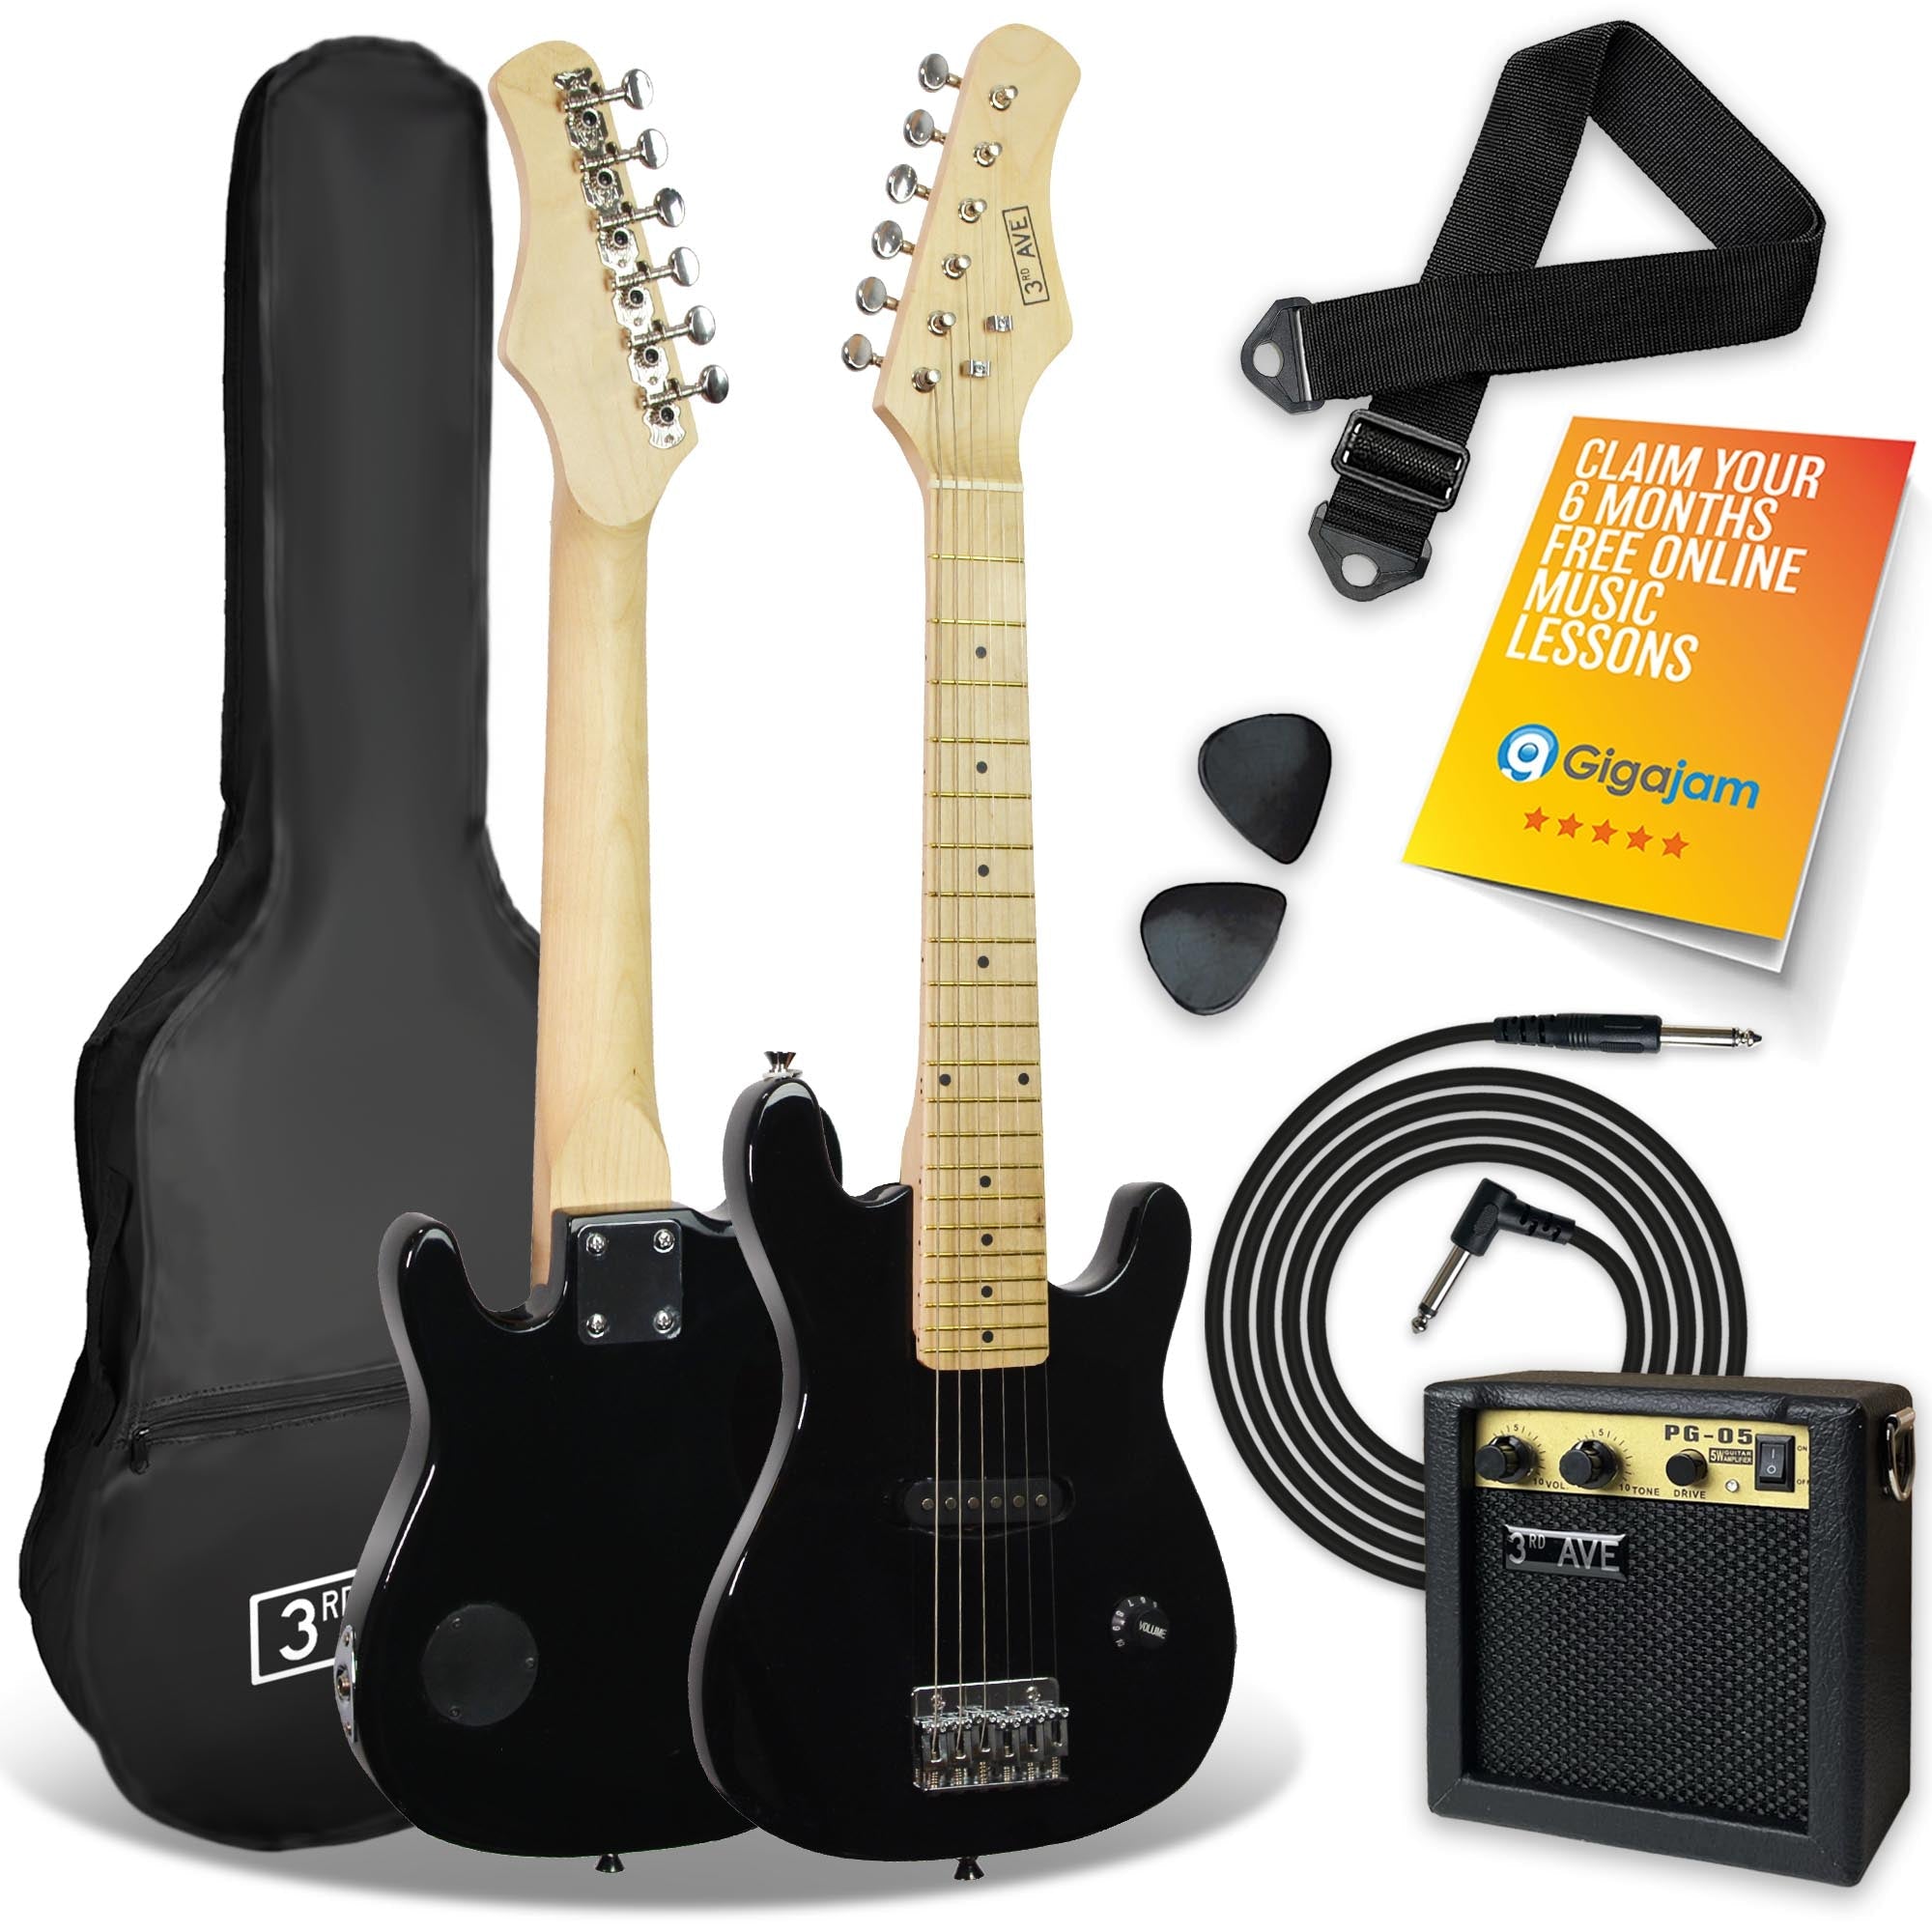 3rd Avenue Junior Electric Guitar Pack